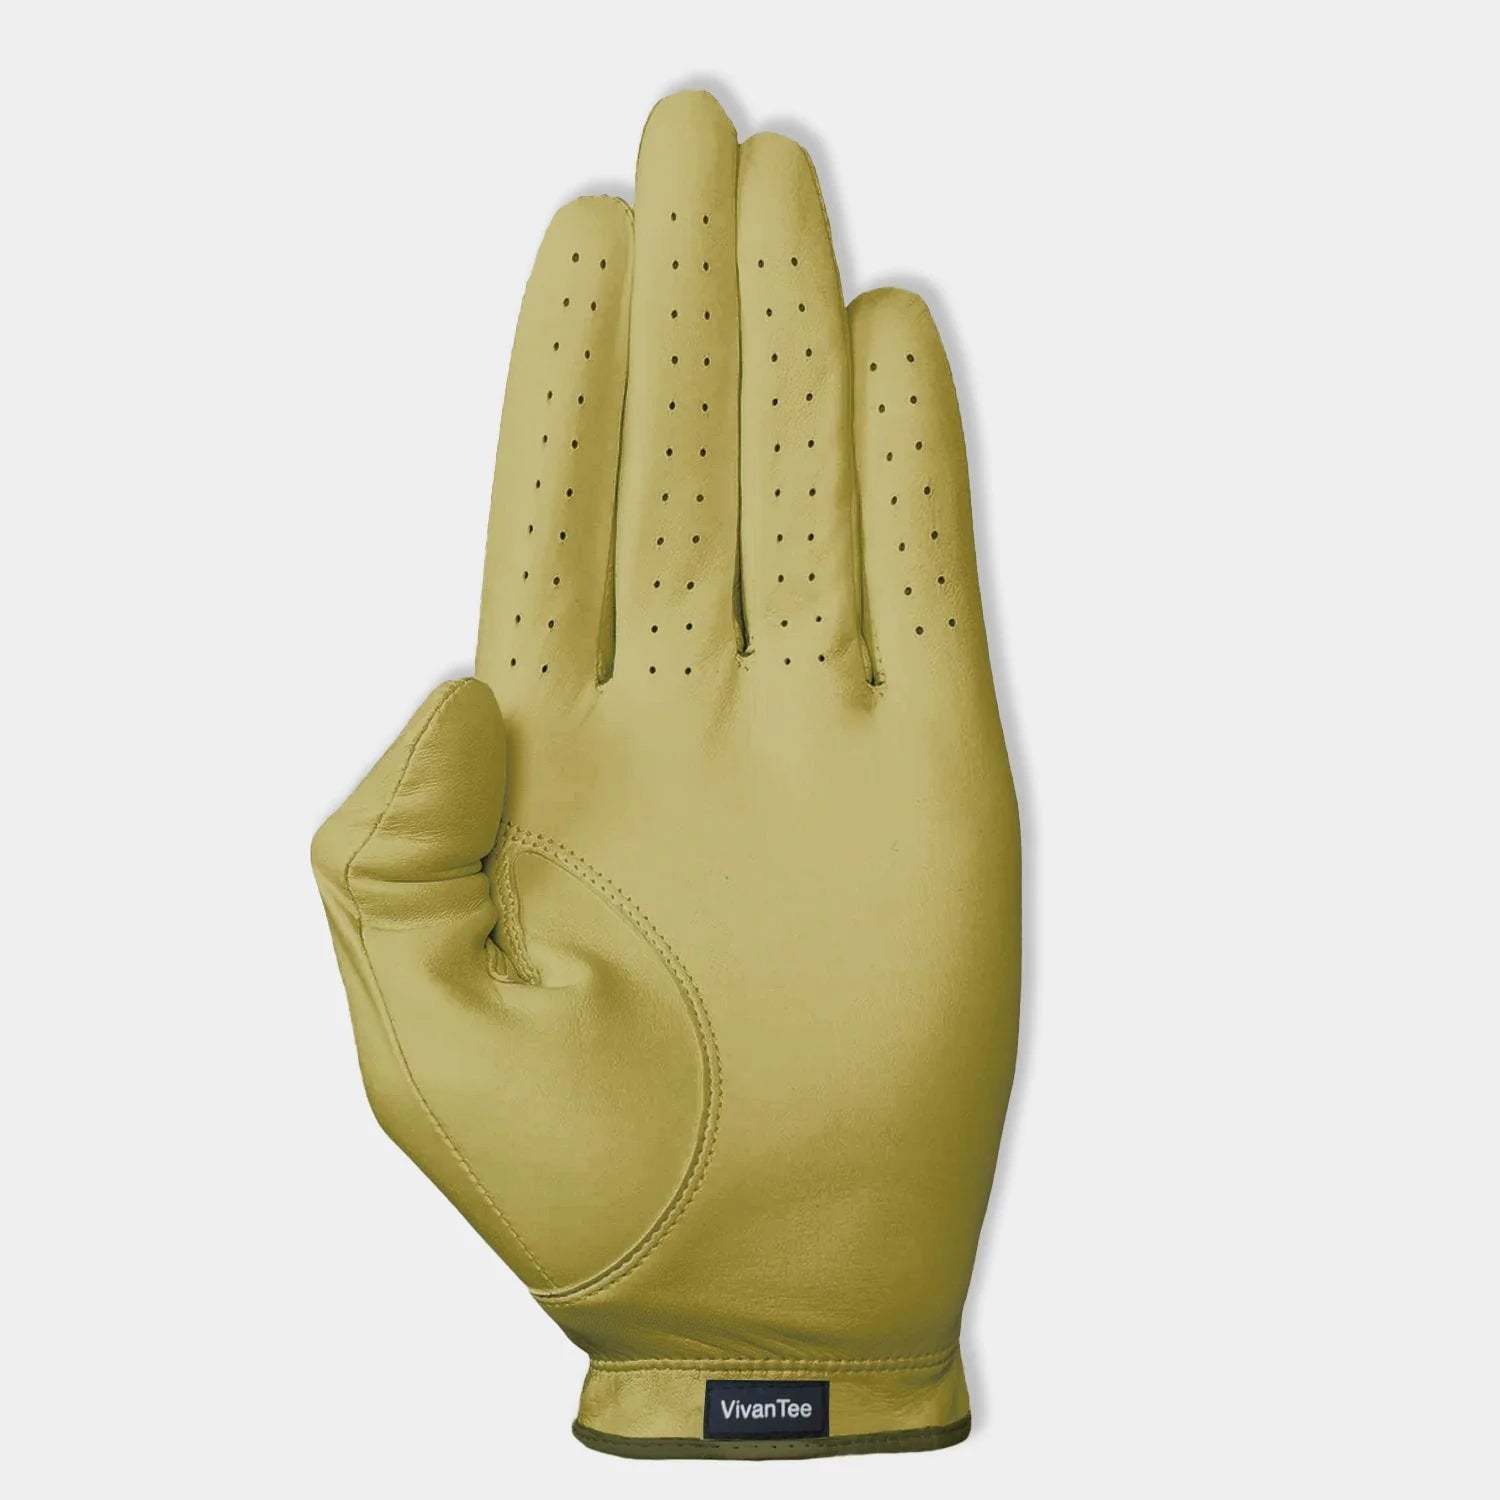 Bottom of VivanTee men's yellow golf glove.